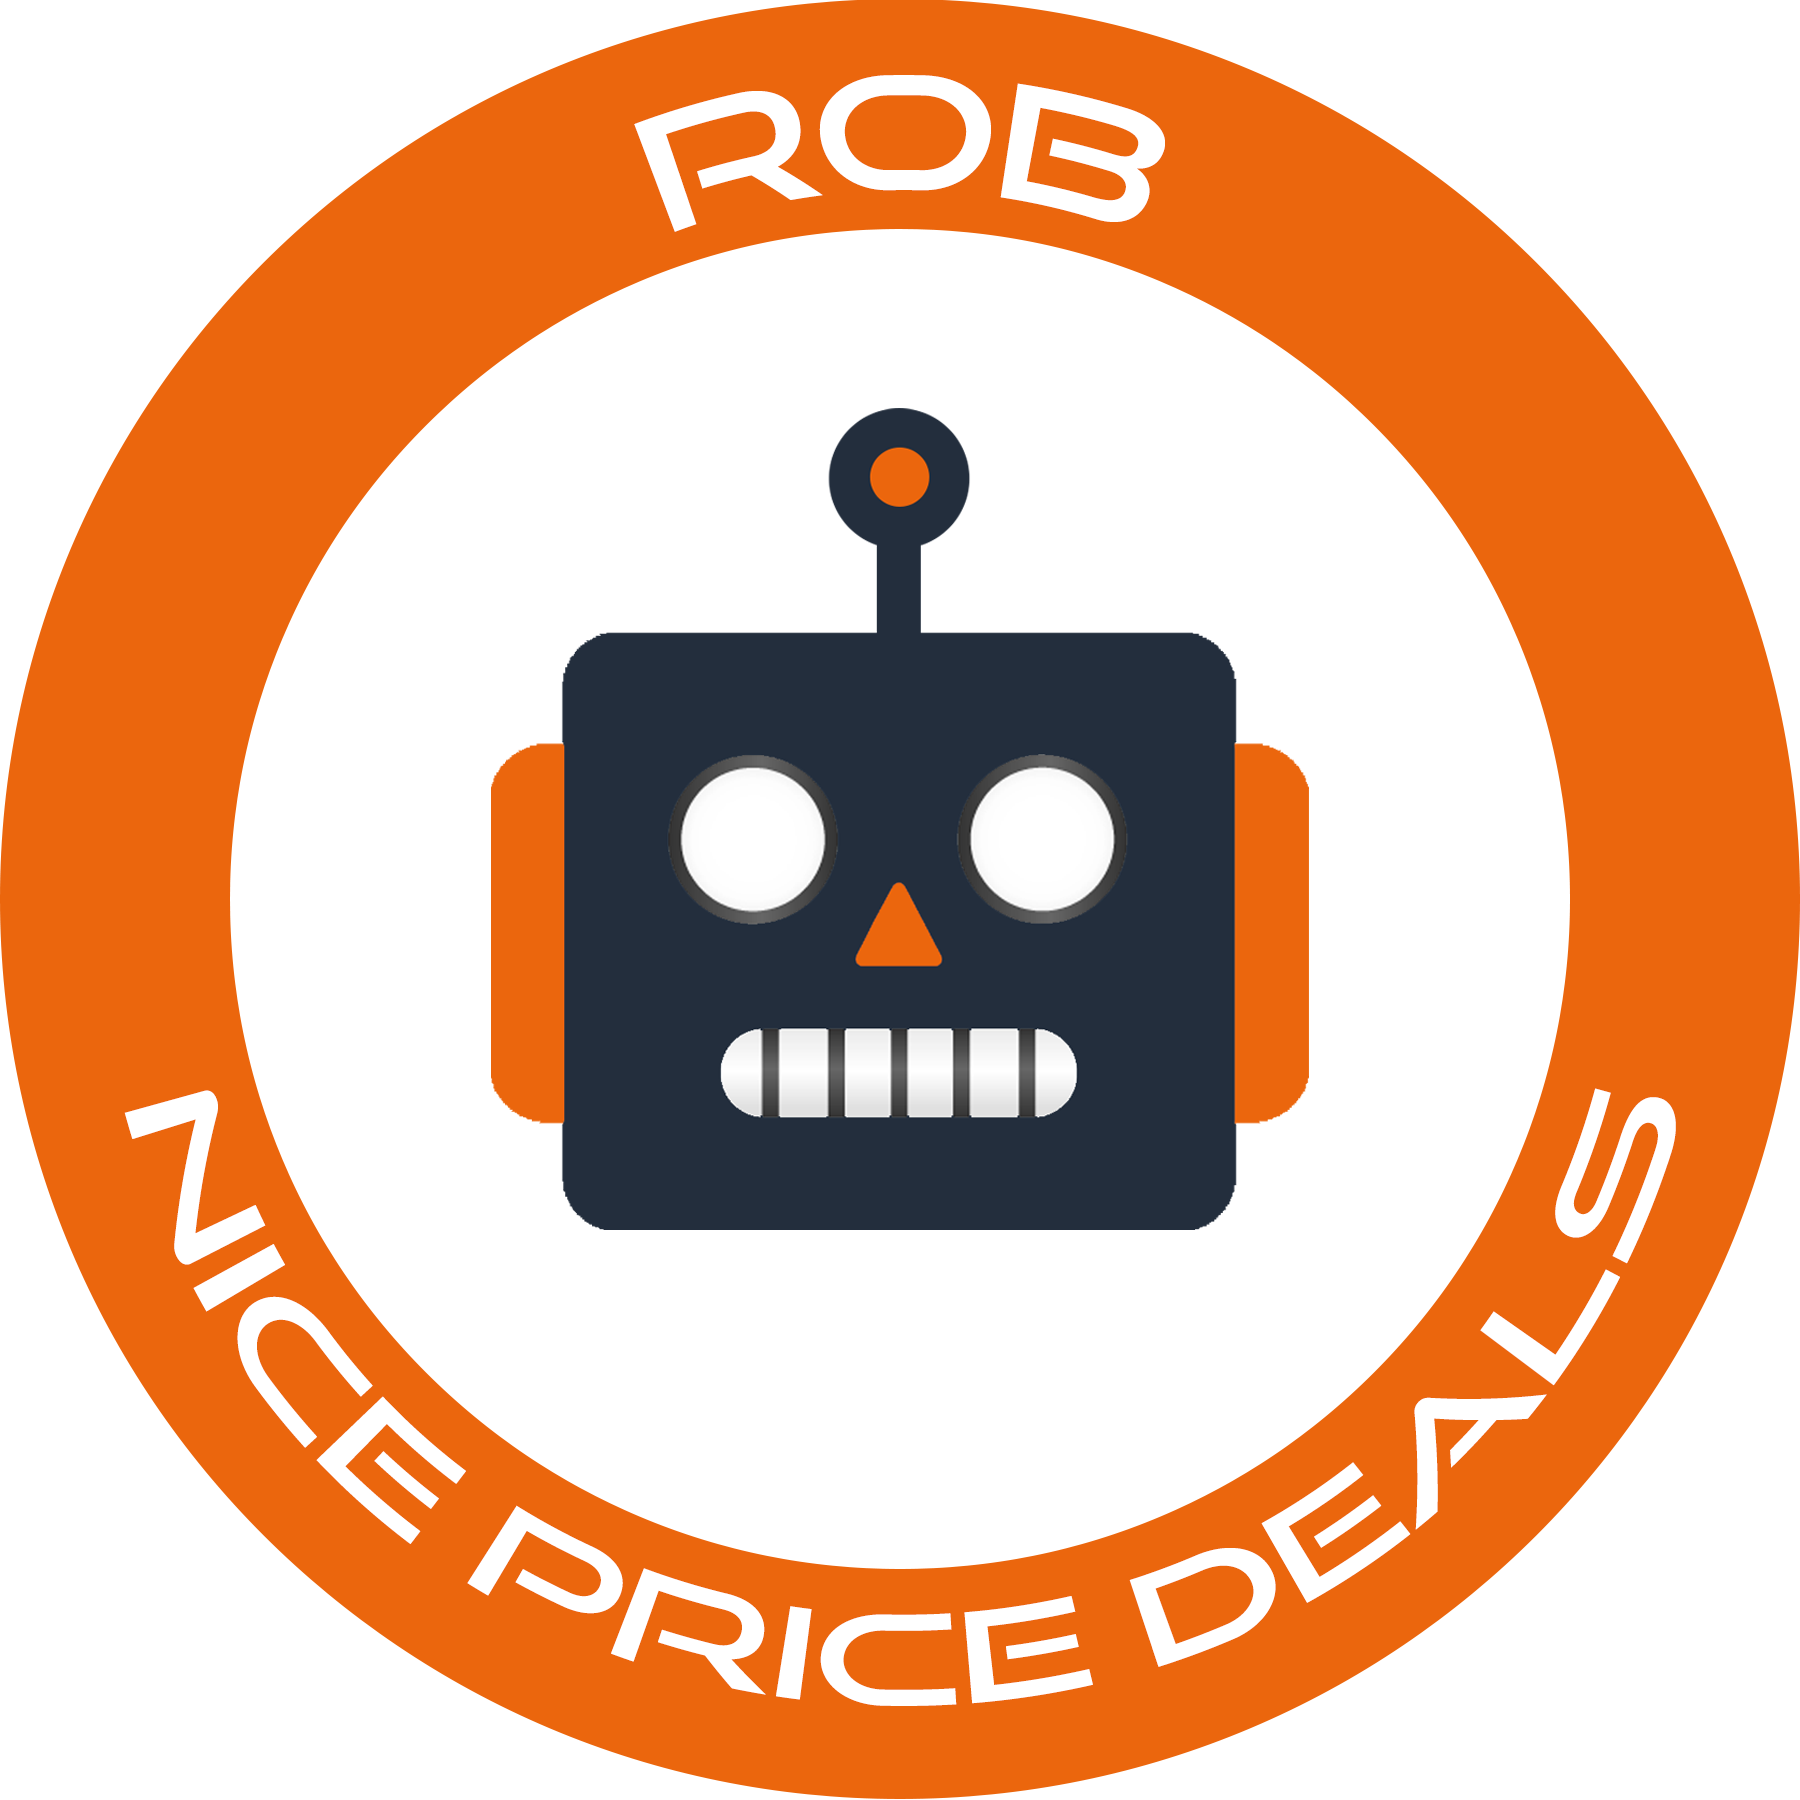 Rob Nice Price Deals